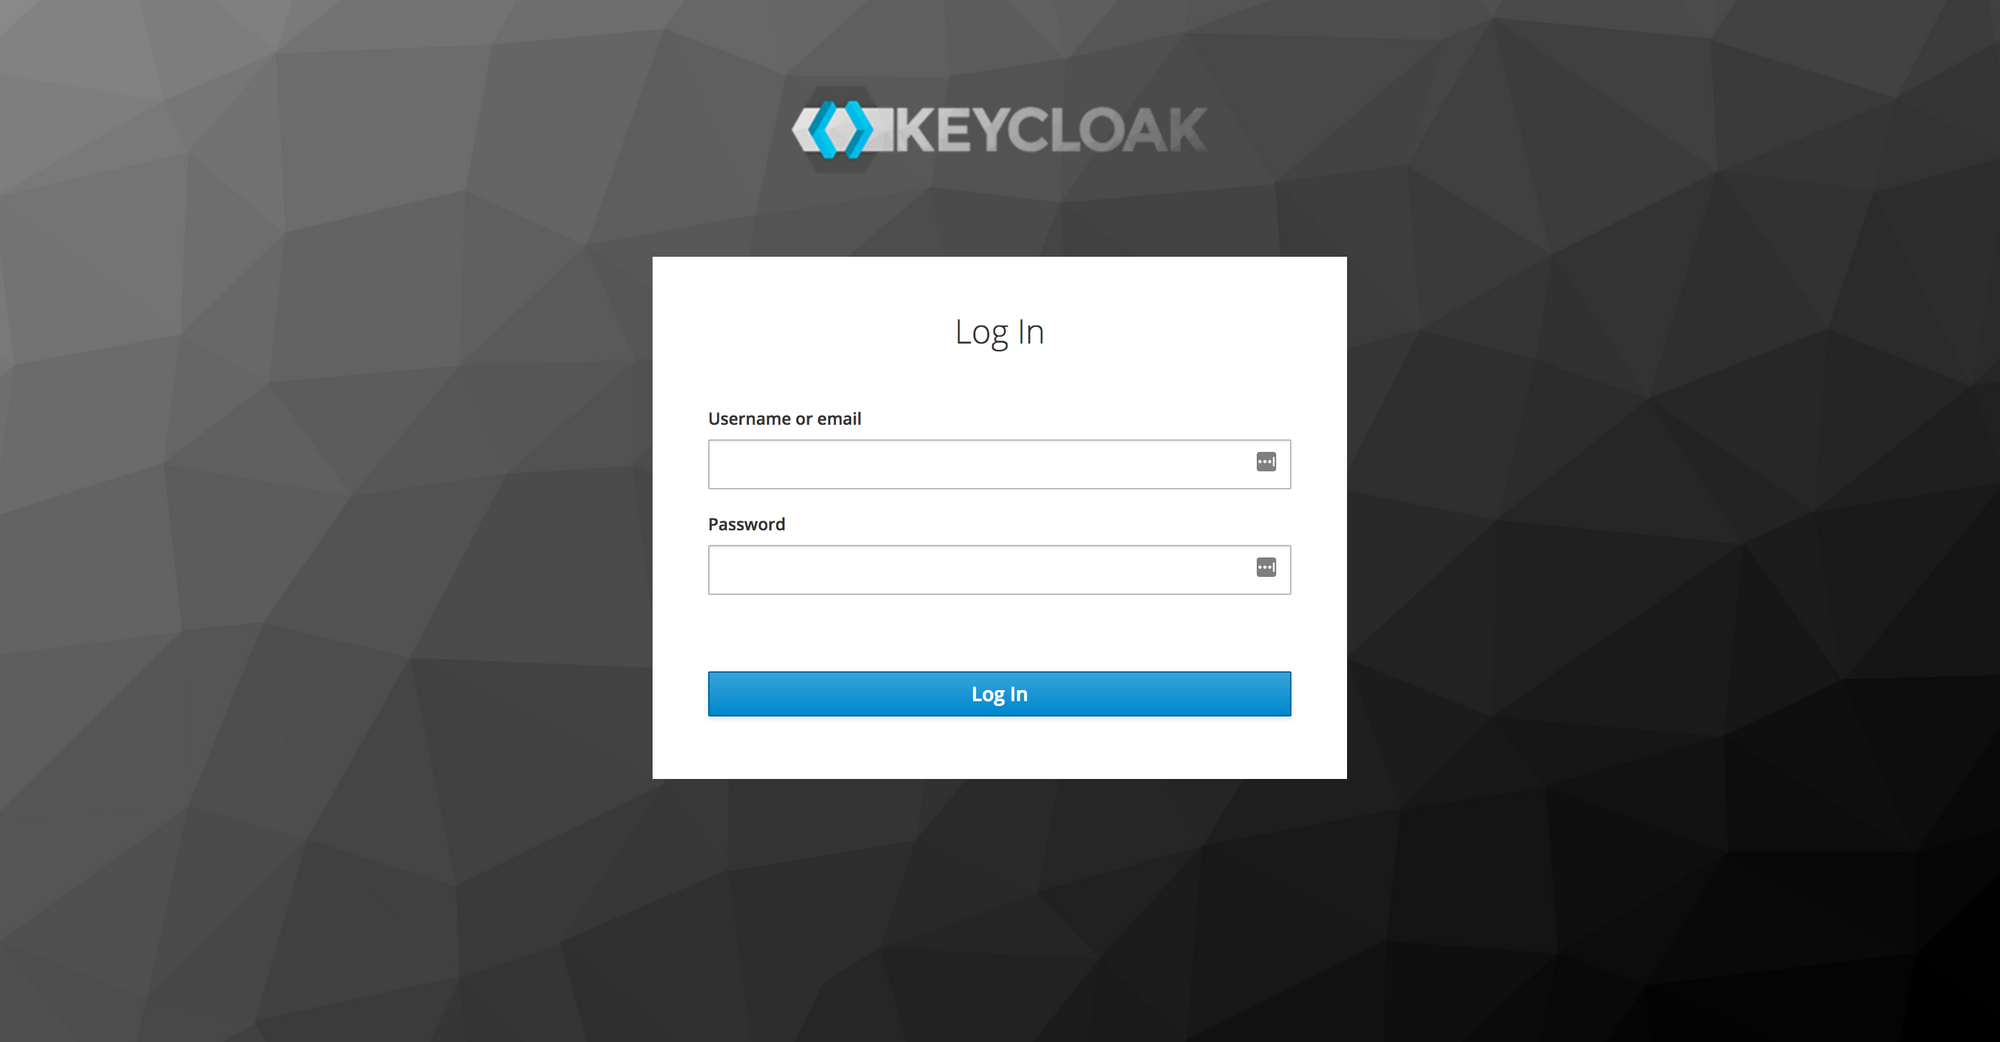 The login form of Keycloak